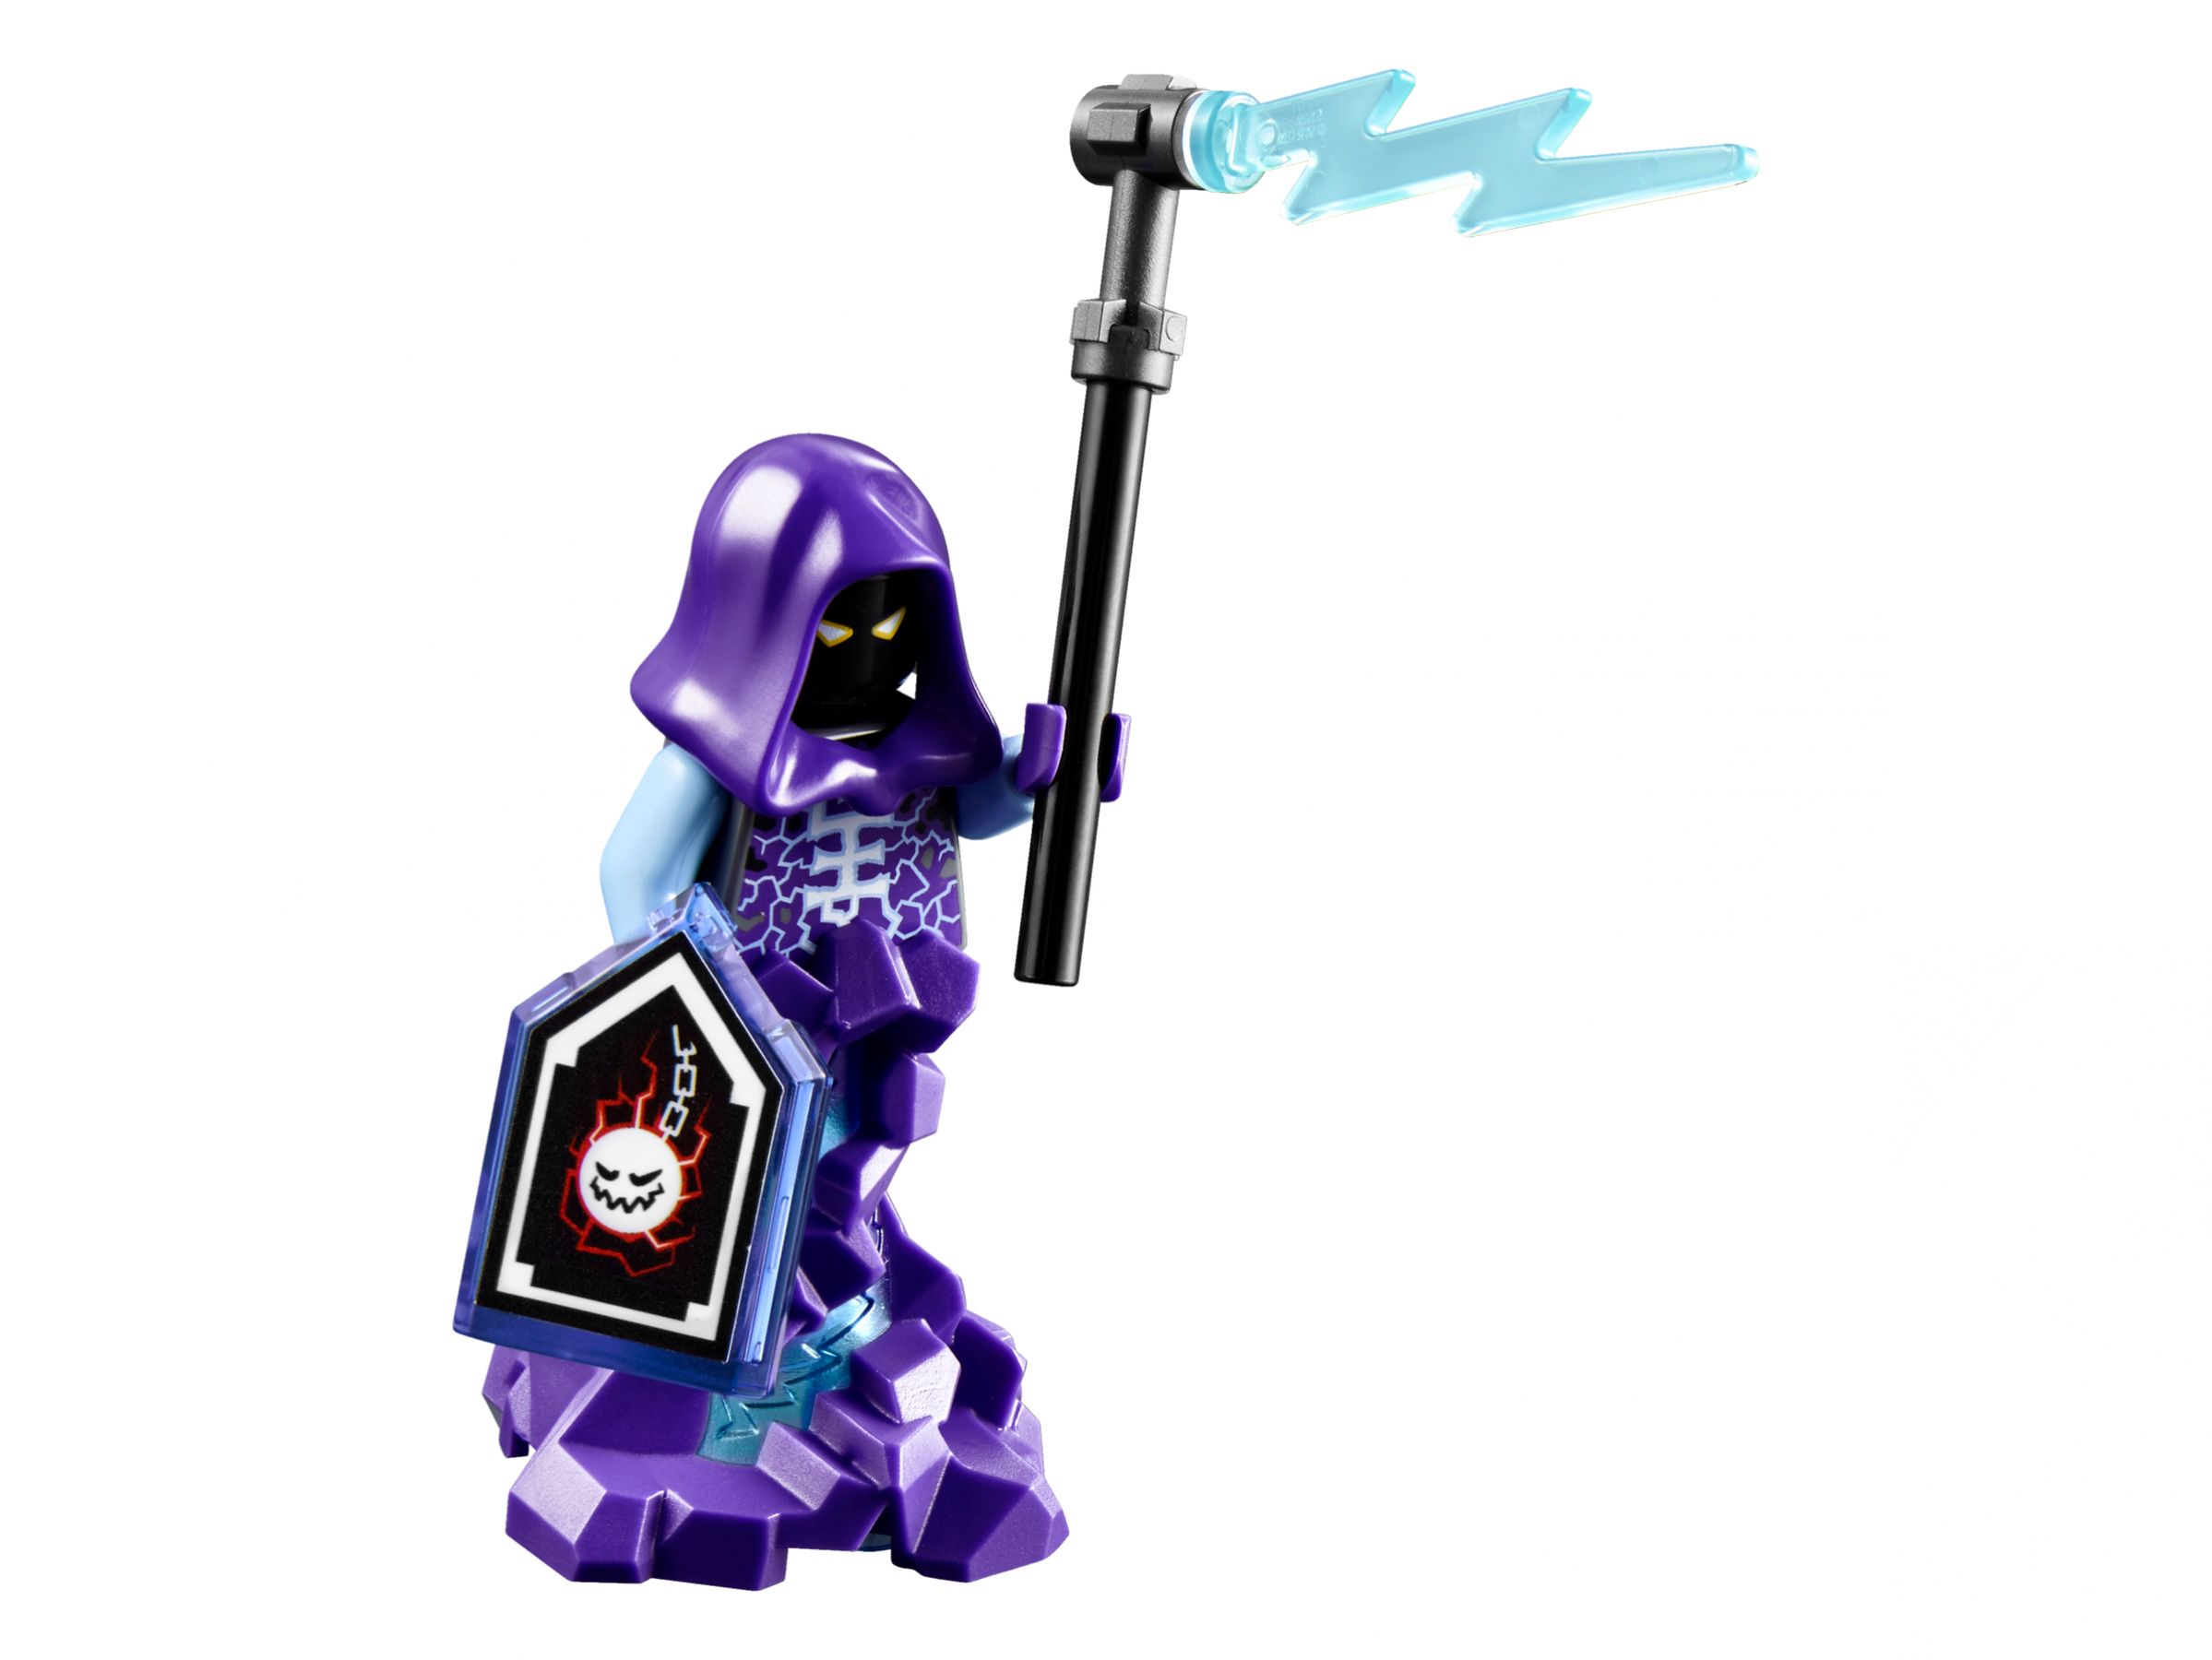 LEGO Nexo Knights 70354 Axls Krawallmacher LEGO_70354_alt8.jpg